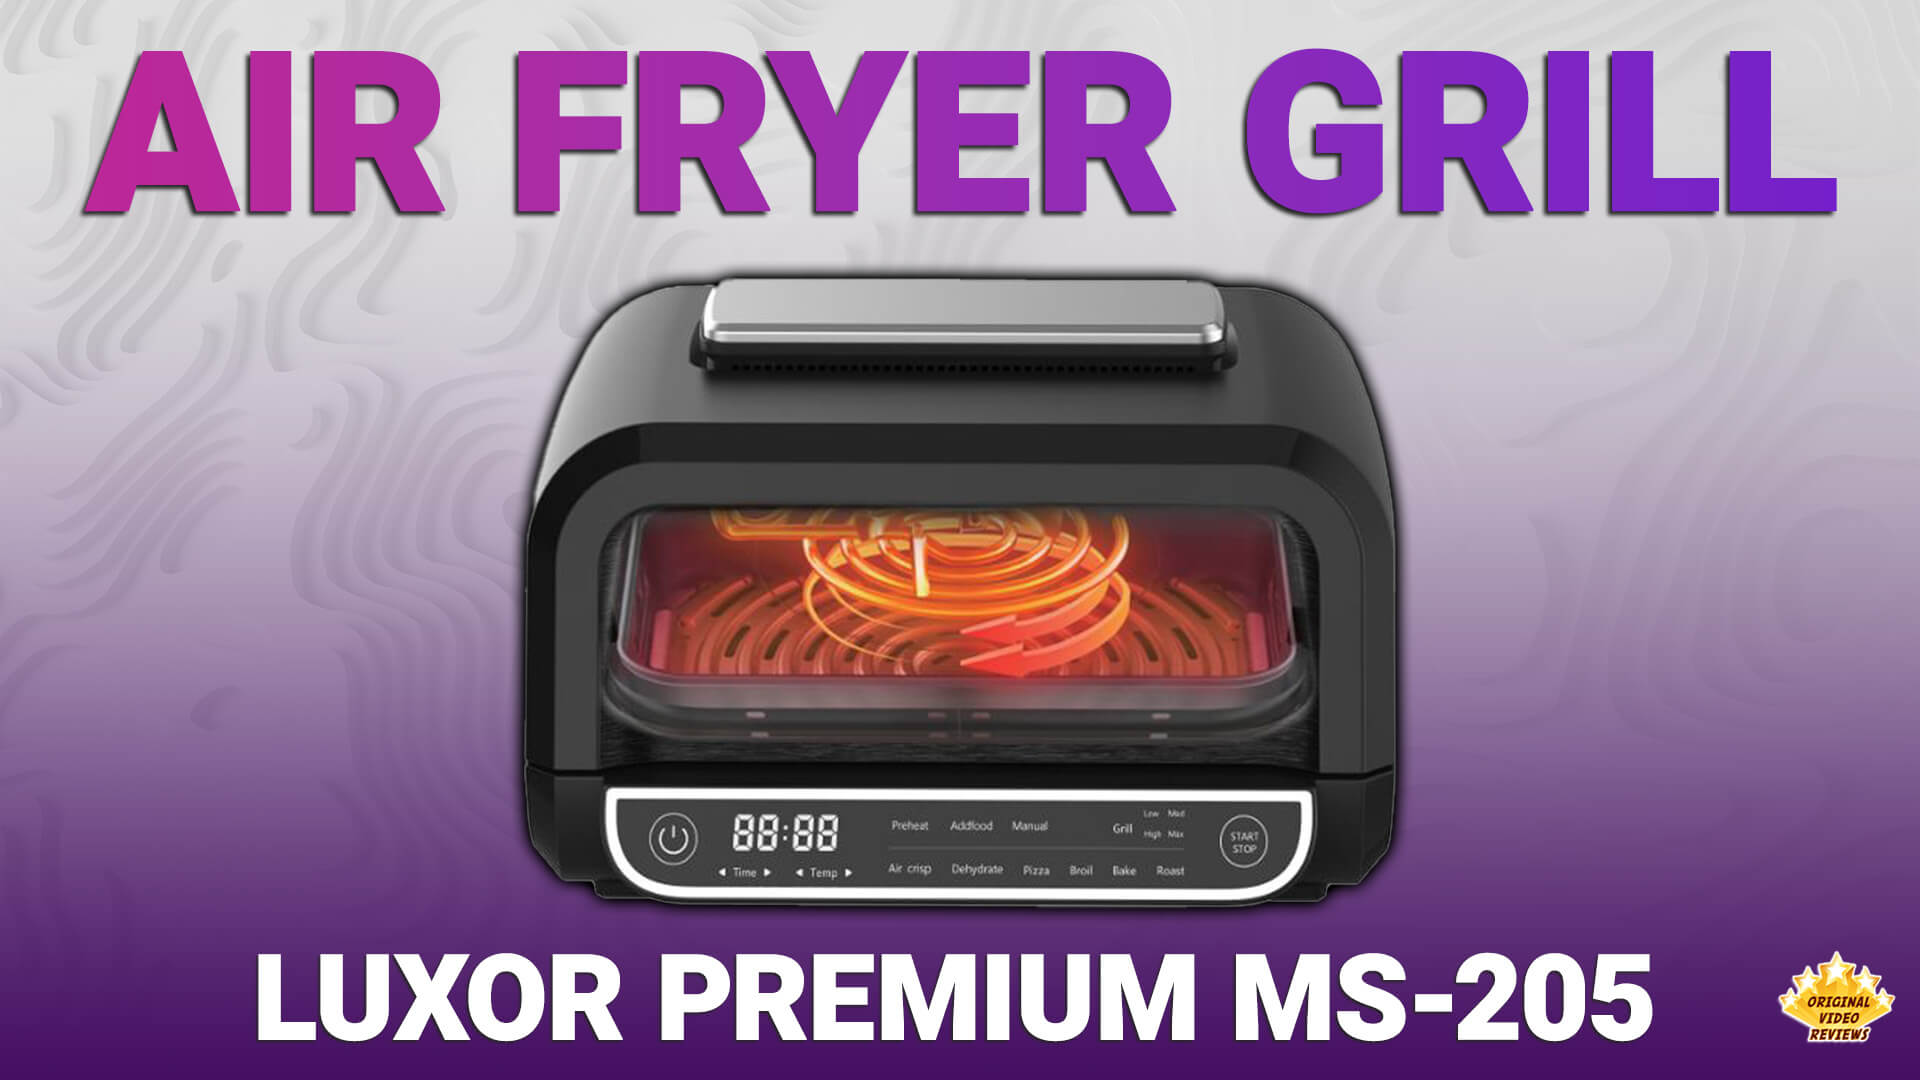 Luxor Premium MS-205 Air Fryer Grill